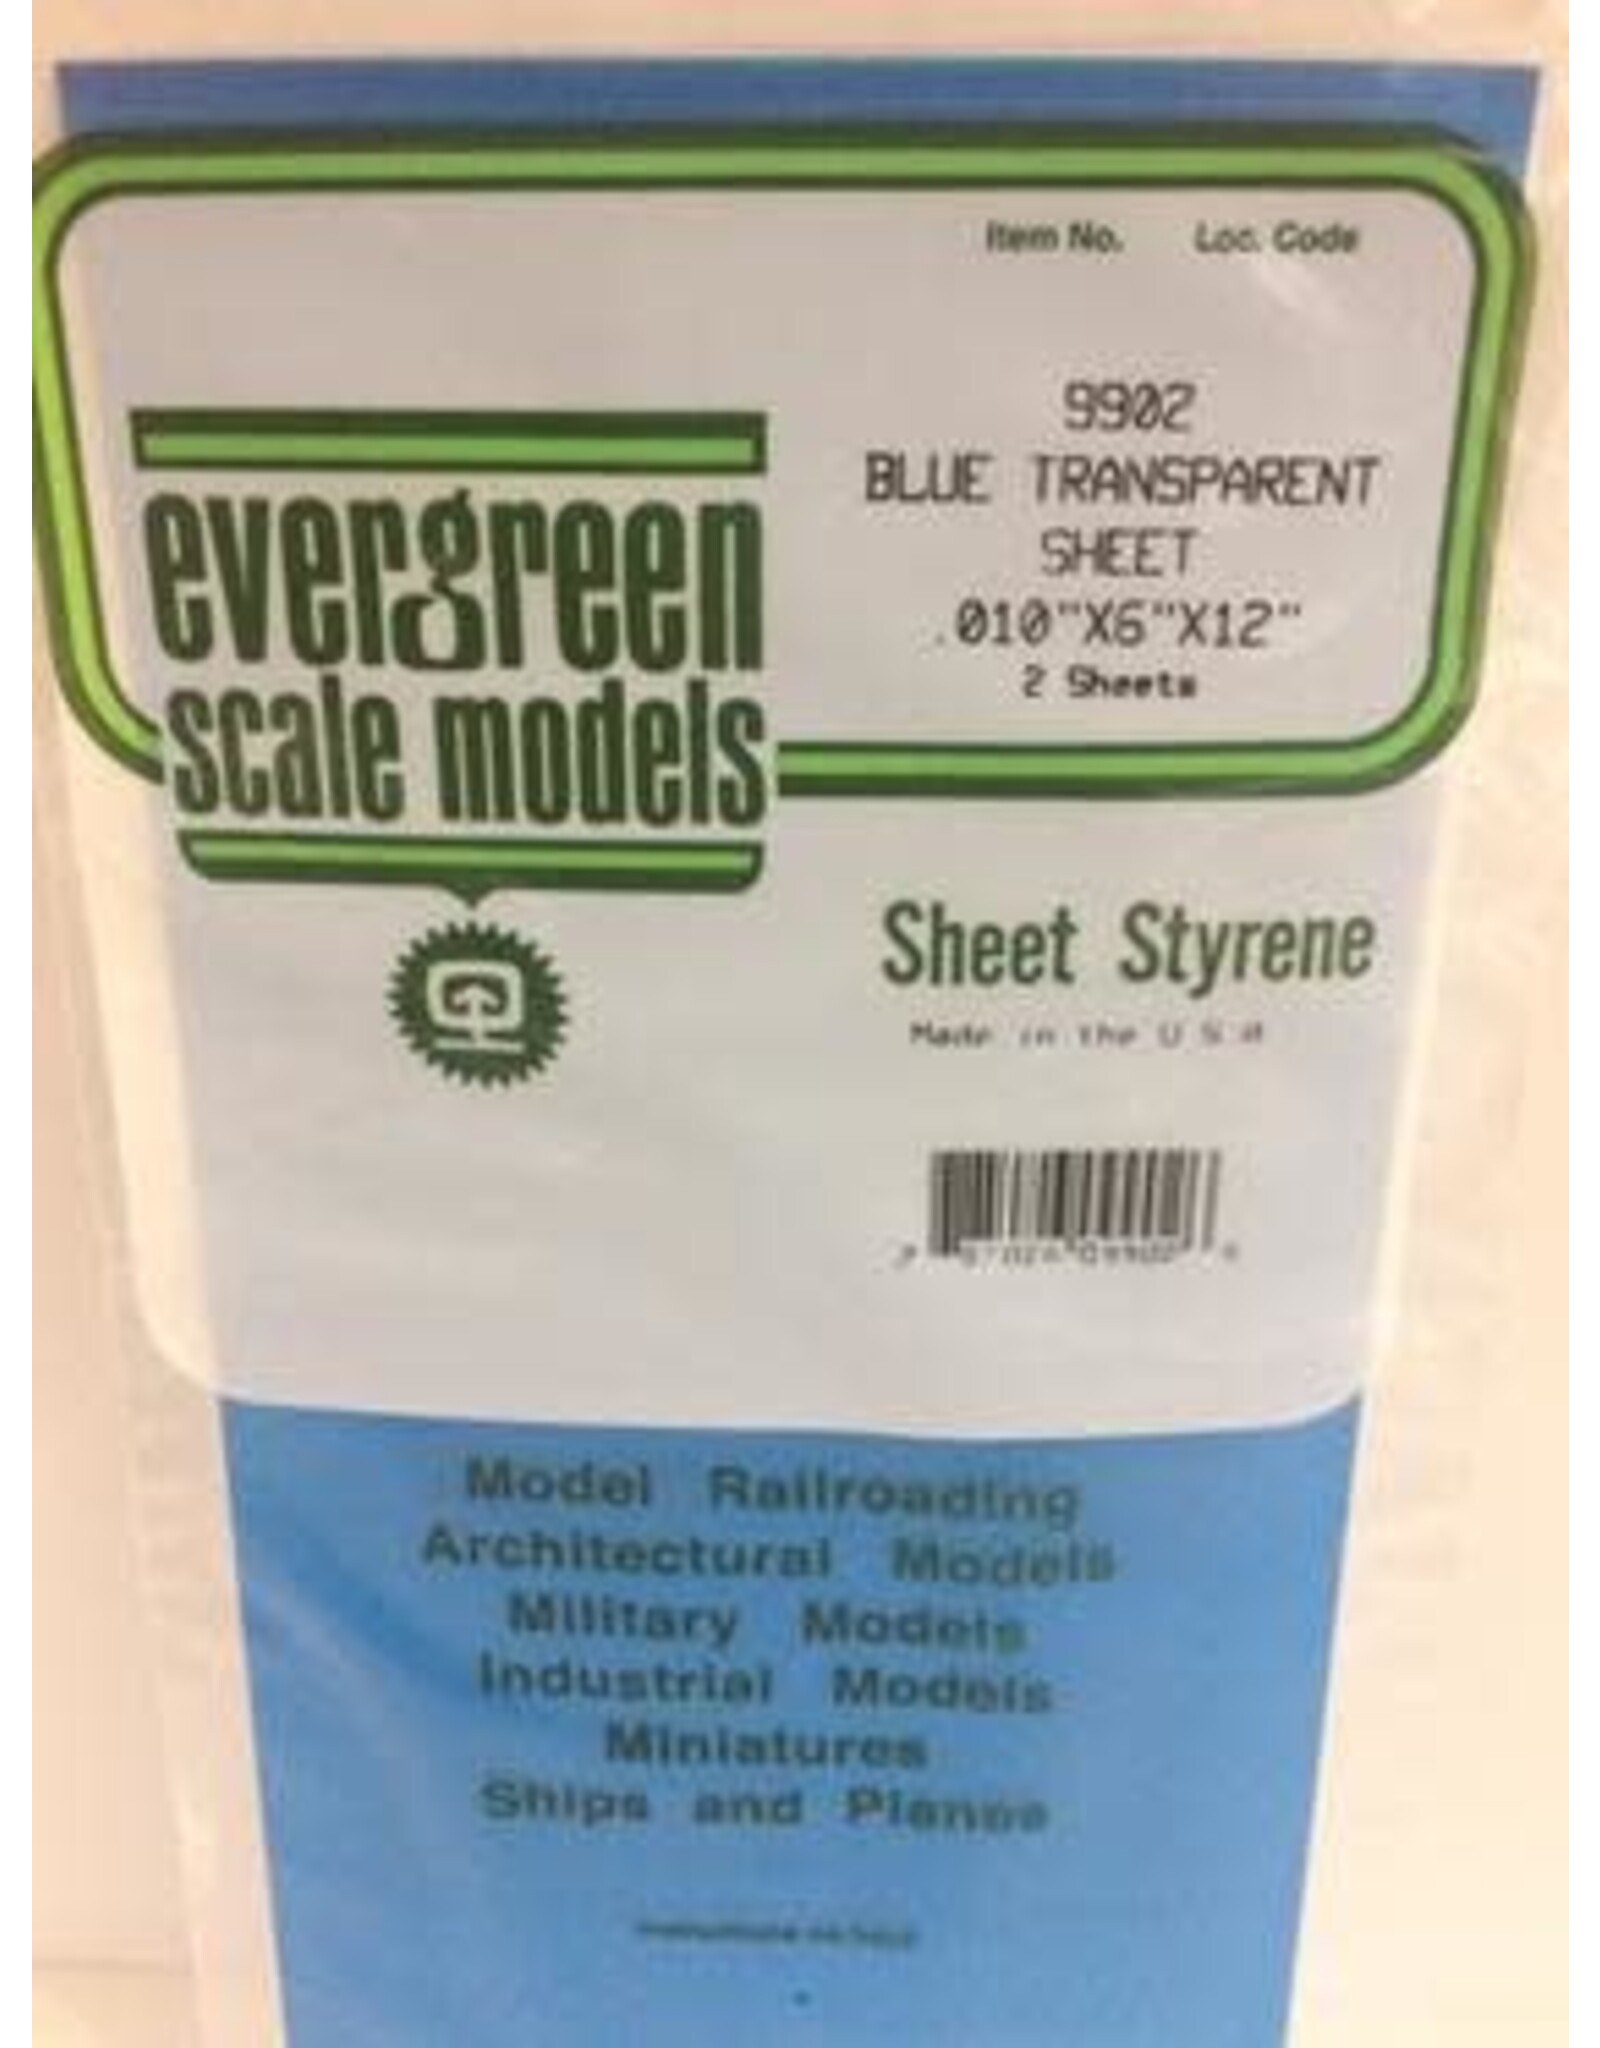 Evergreen .010x6x12"BLUE TRANSPARENT SHEETS 2